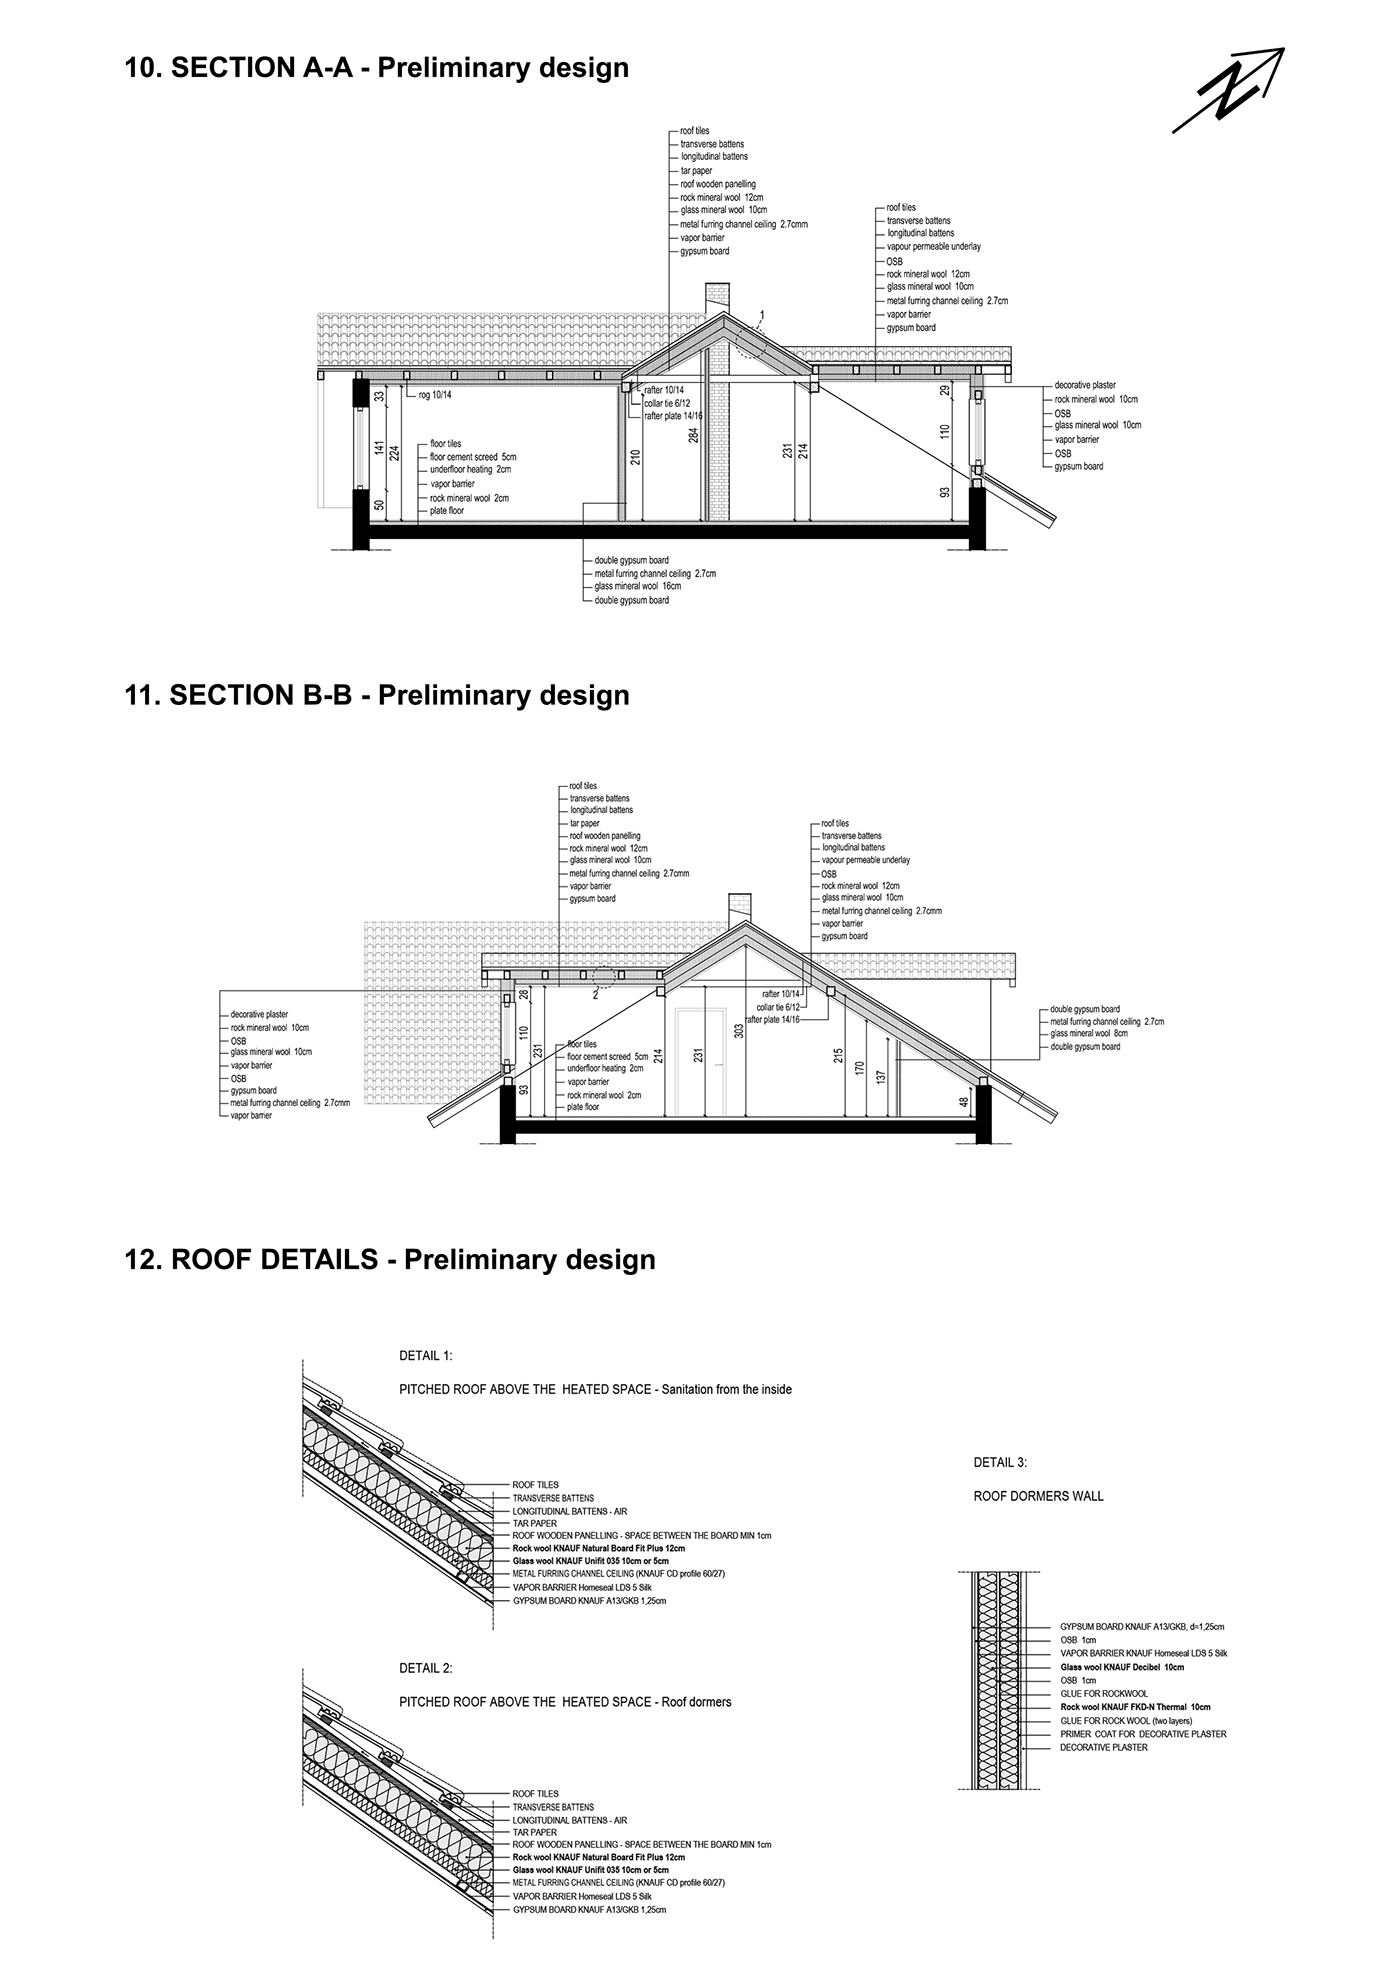 LOFT interior design  residental architecture 3ds max Adobe Photoshop furniture